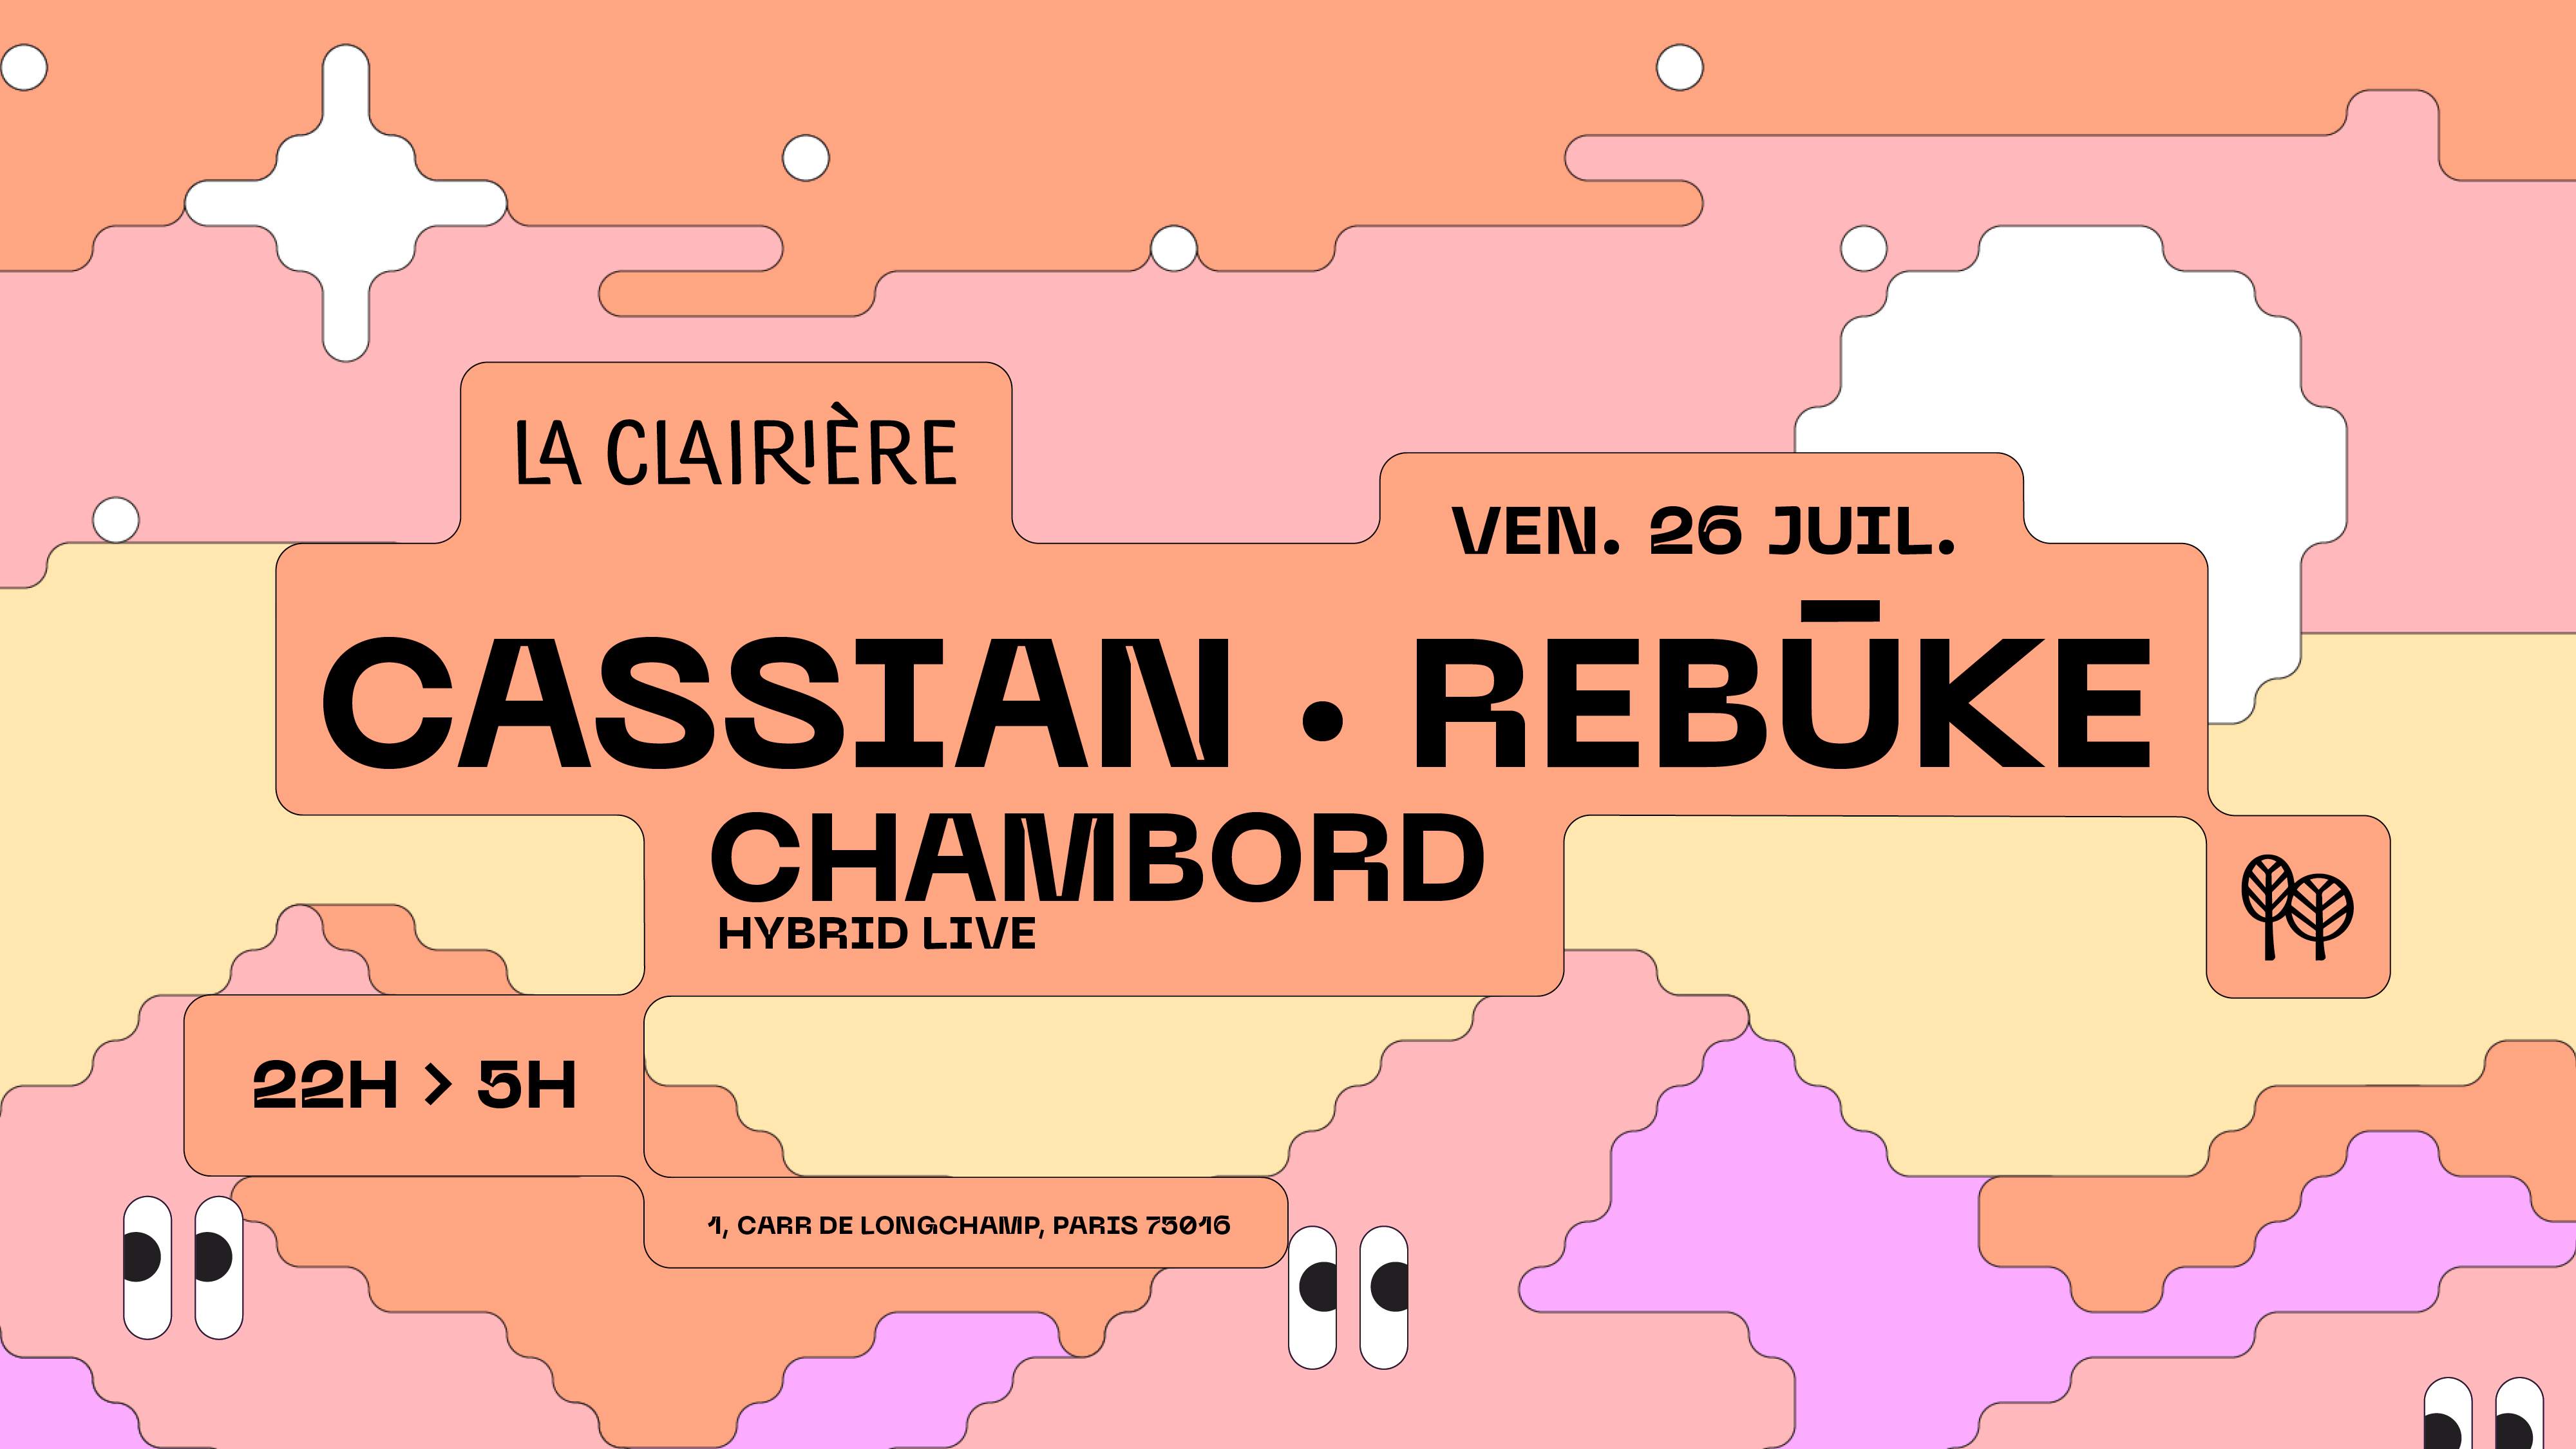 La Clairière: Cassian, Rebuke, Chambord (Hybrid live) - Página frontal